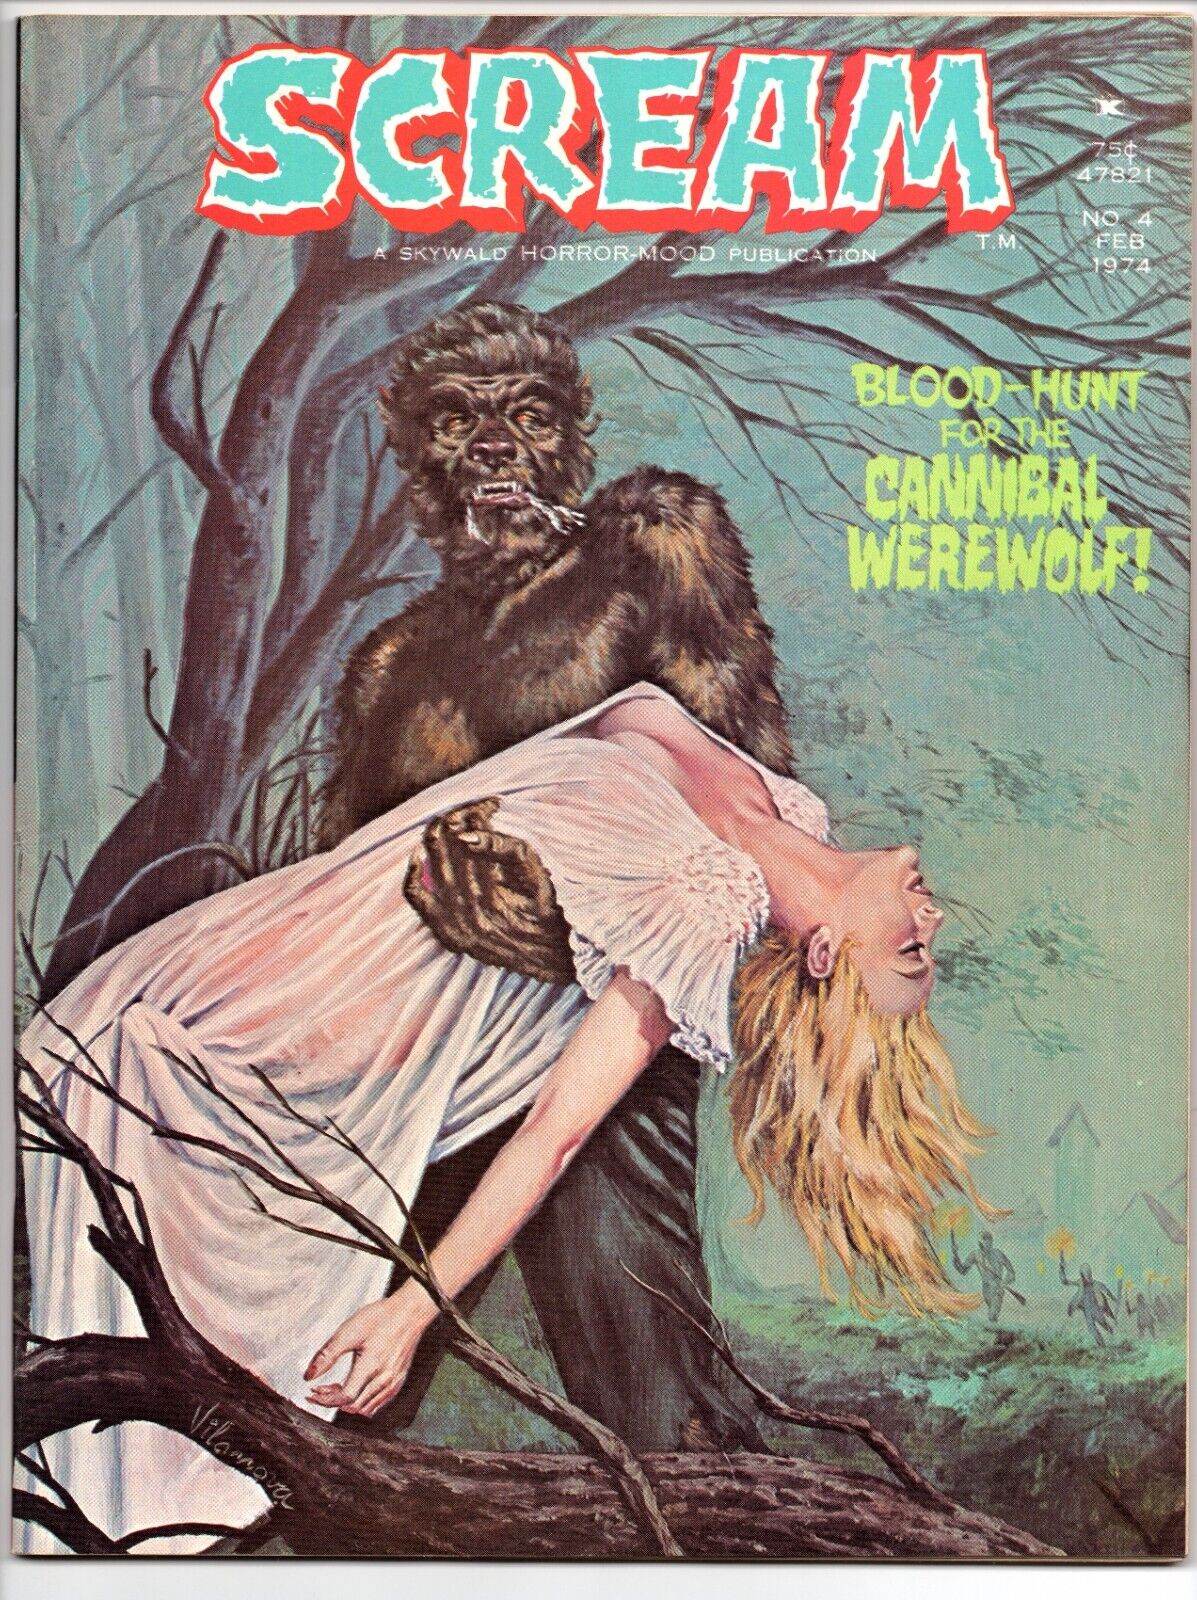 SCREAM 4 Feb. 1974 Edgar Allan Poe US comic book SKYWALD HORROR MOOD magazine VF